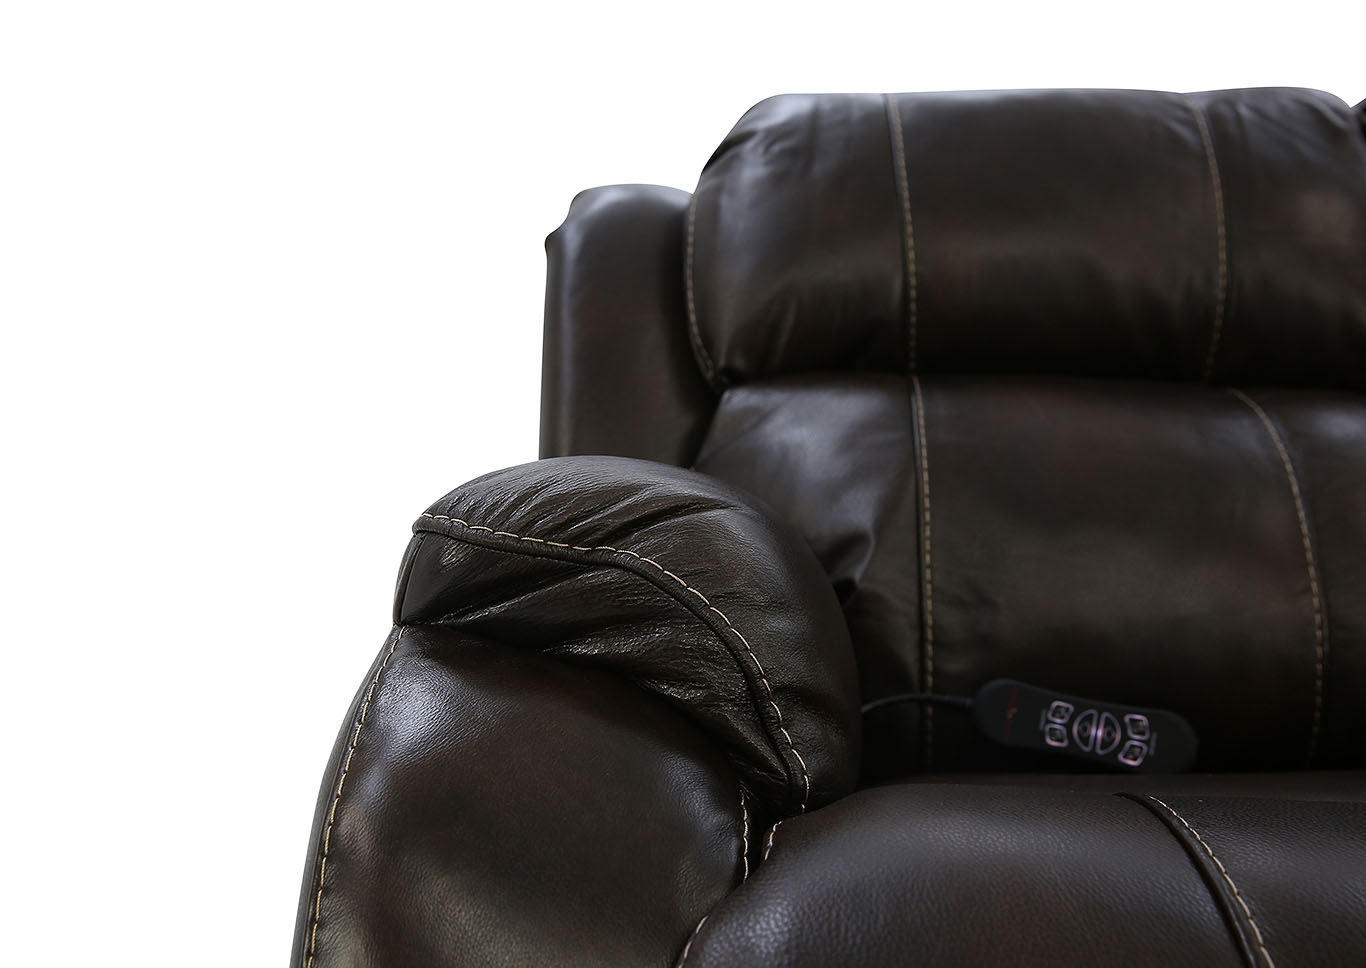 westley leather power reclining sofa